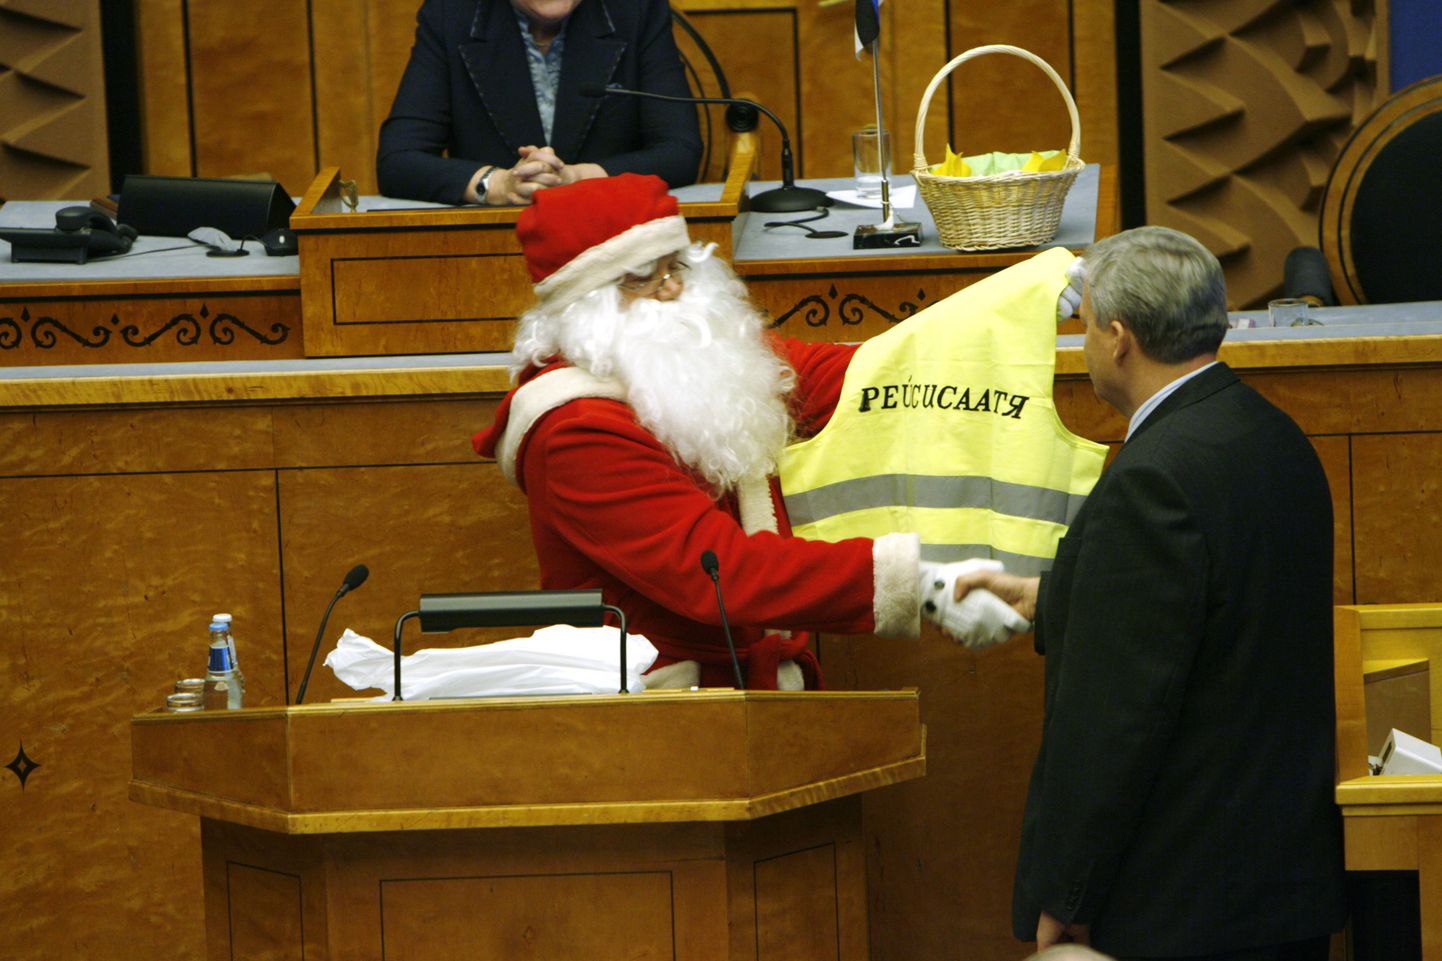 Реформистам Дед мороз подарил жилет.